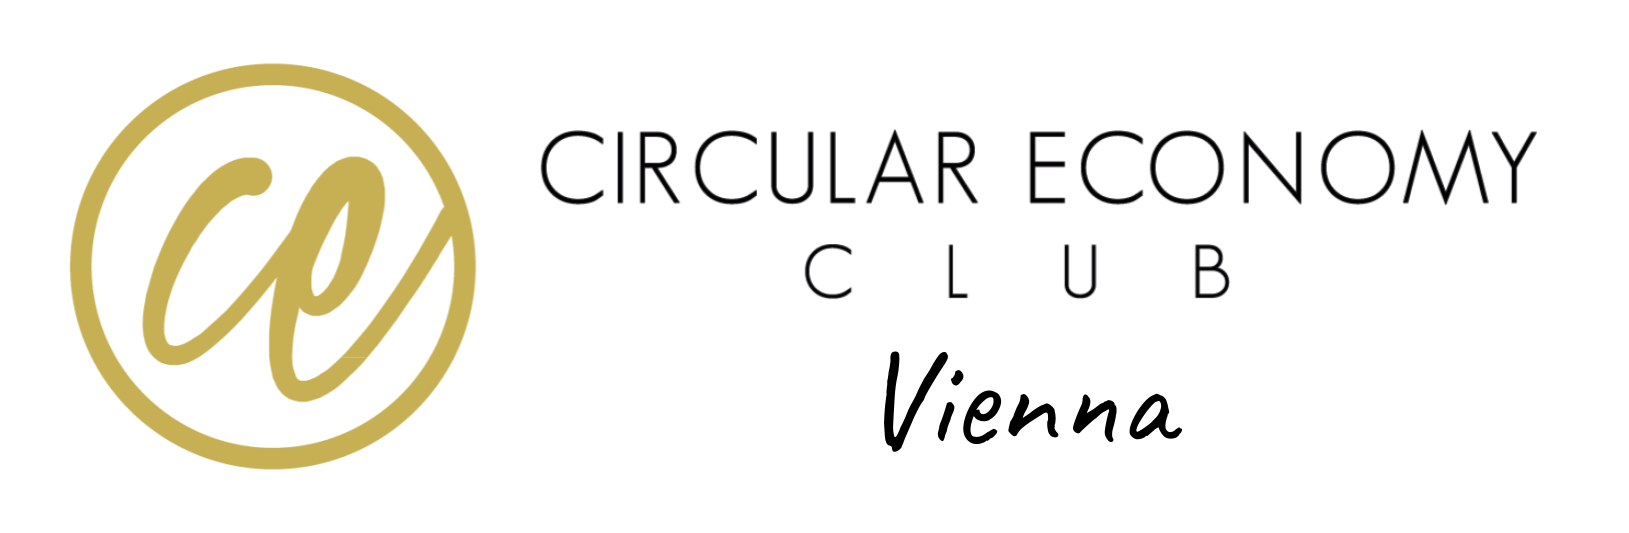 Circular Economy Club Vienna